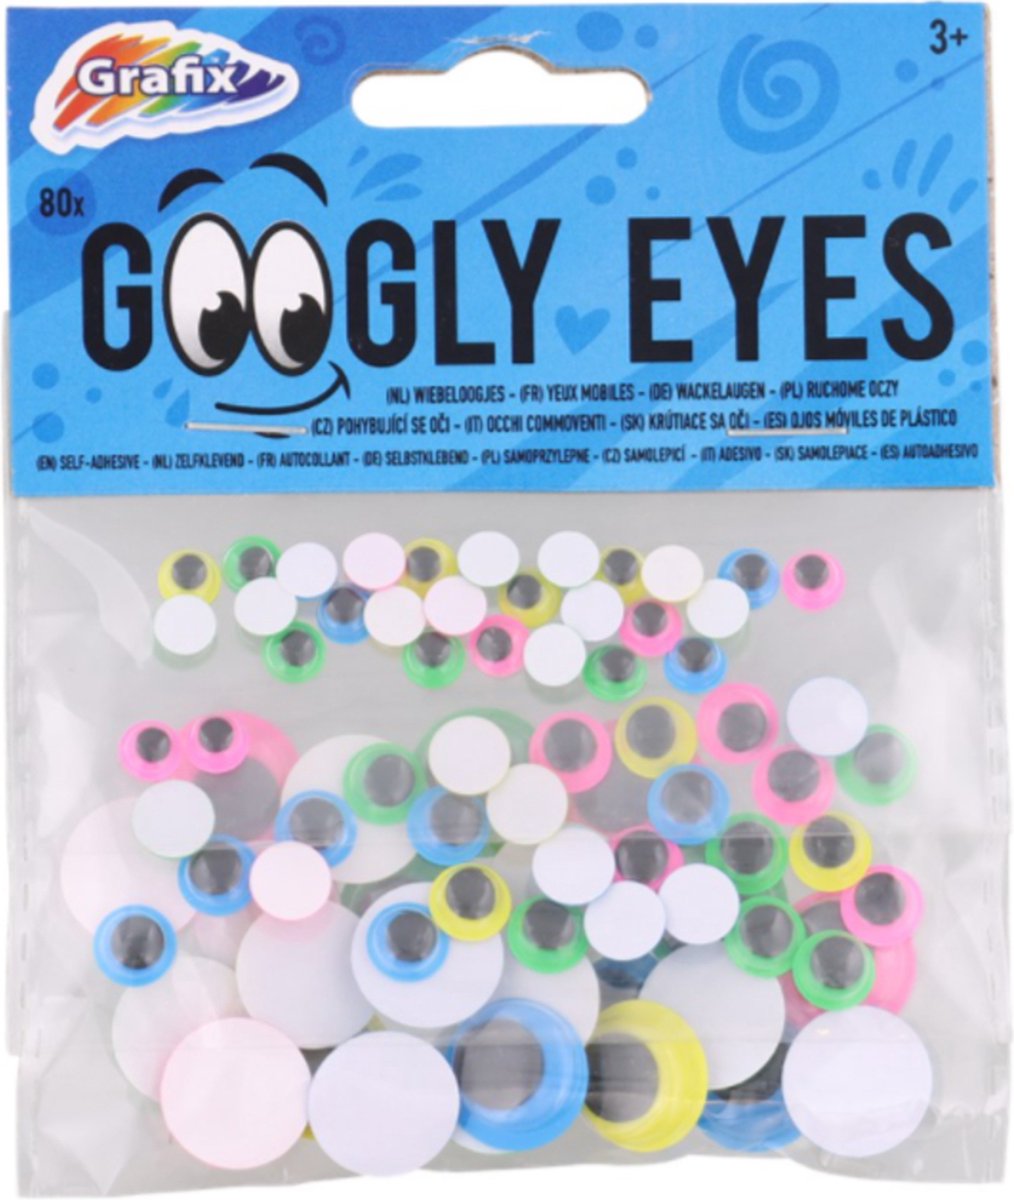 Grafix Googly Eyes - Plakoogjes - Wiebeloogjes - Eyes - 3 soorten maken en kleuren - 80 stuks - Knutselen - Tekenen - Plakken - Stickers - Knutselpakket - Wiebeloogjes - Multikleuren.